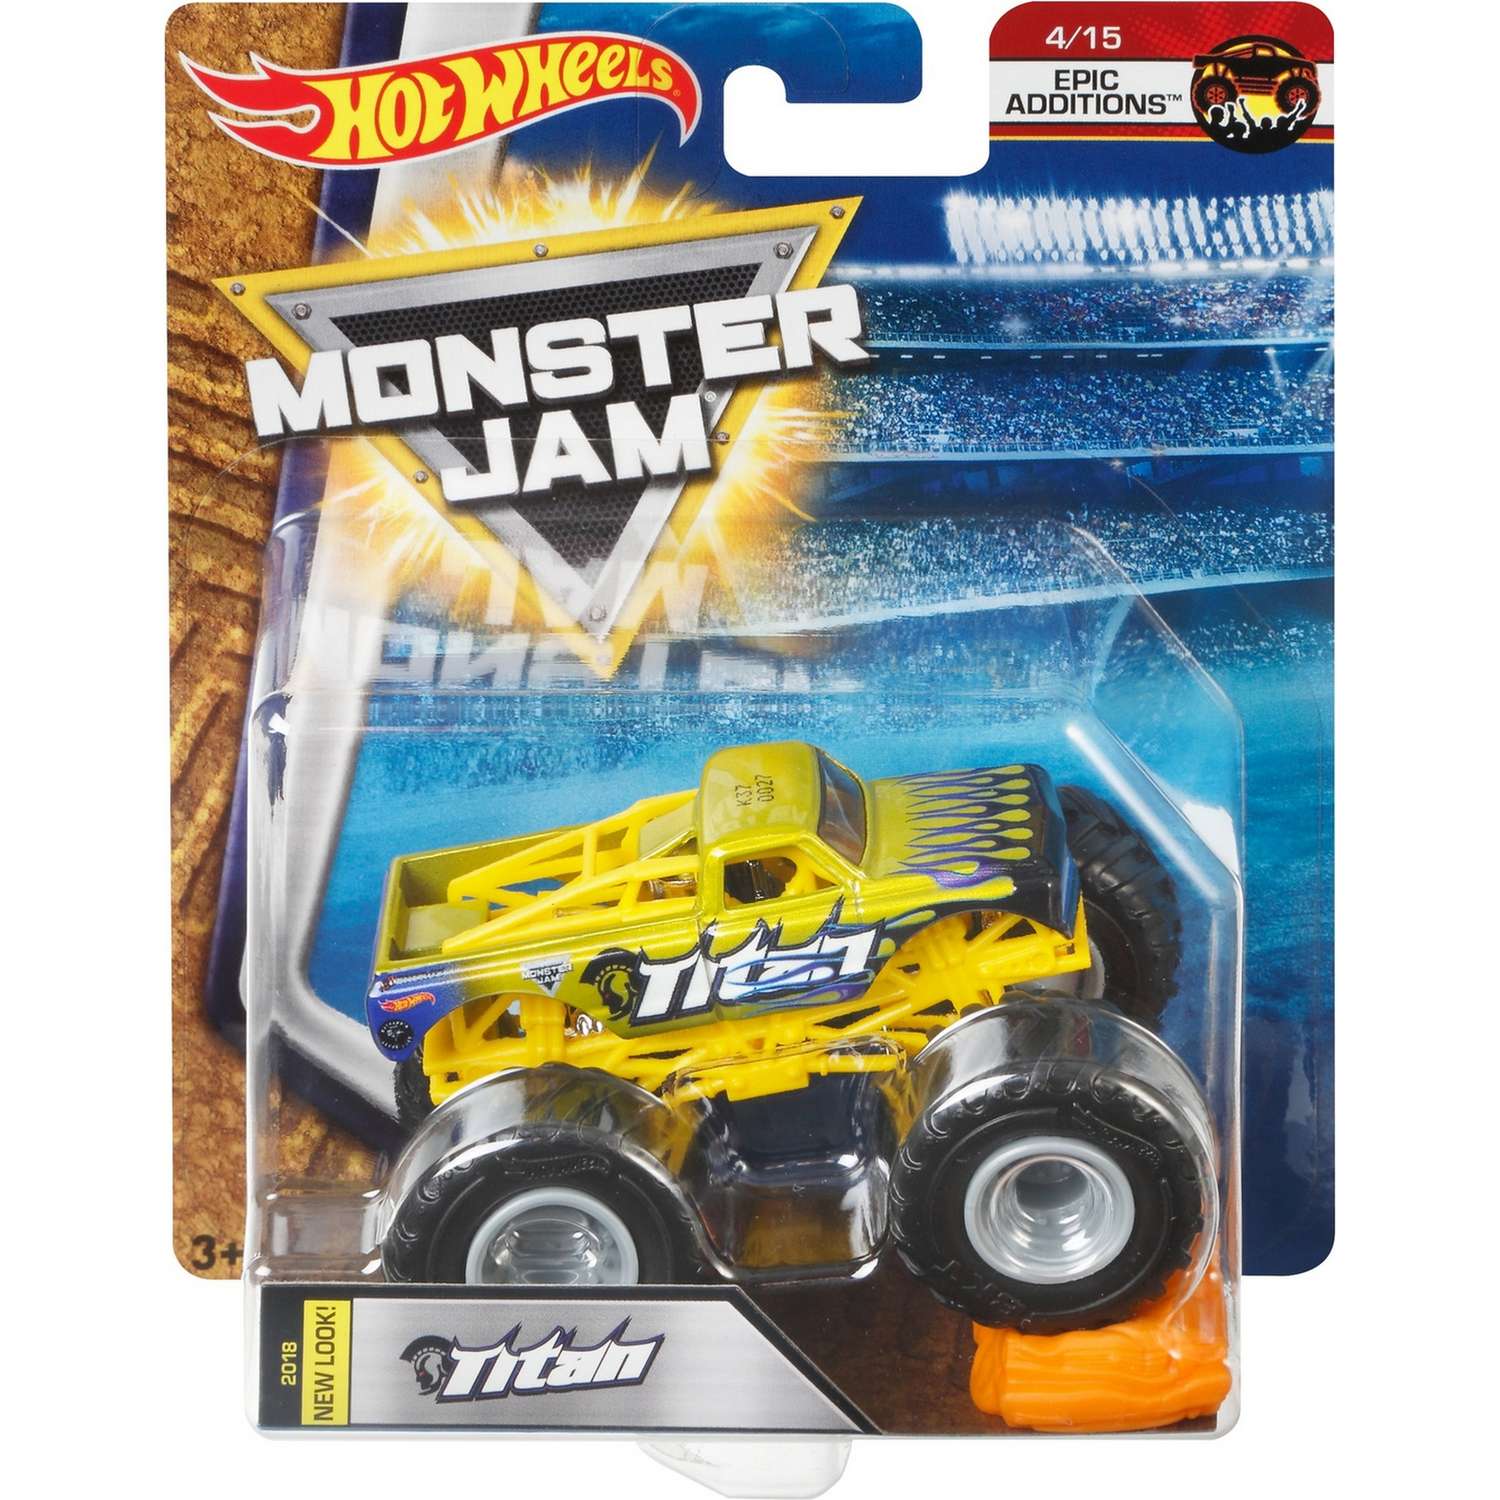 Машина Hot Wheels Monster Jam 1:64 Epic Edditions Титан новый дизайн FLW96 21572 - фото 2